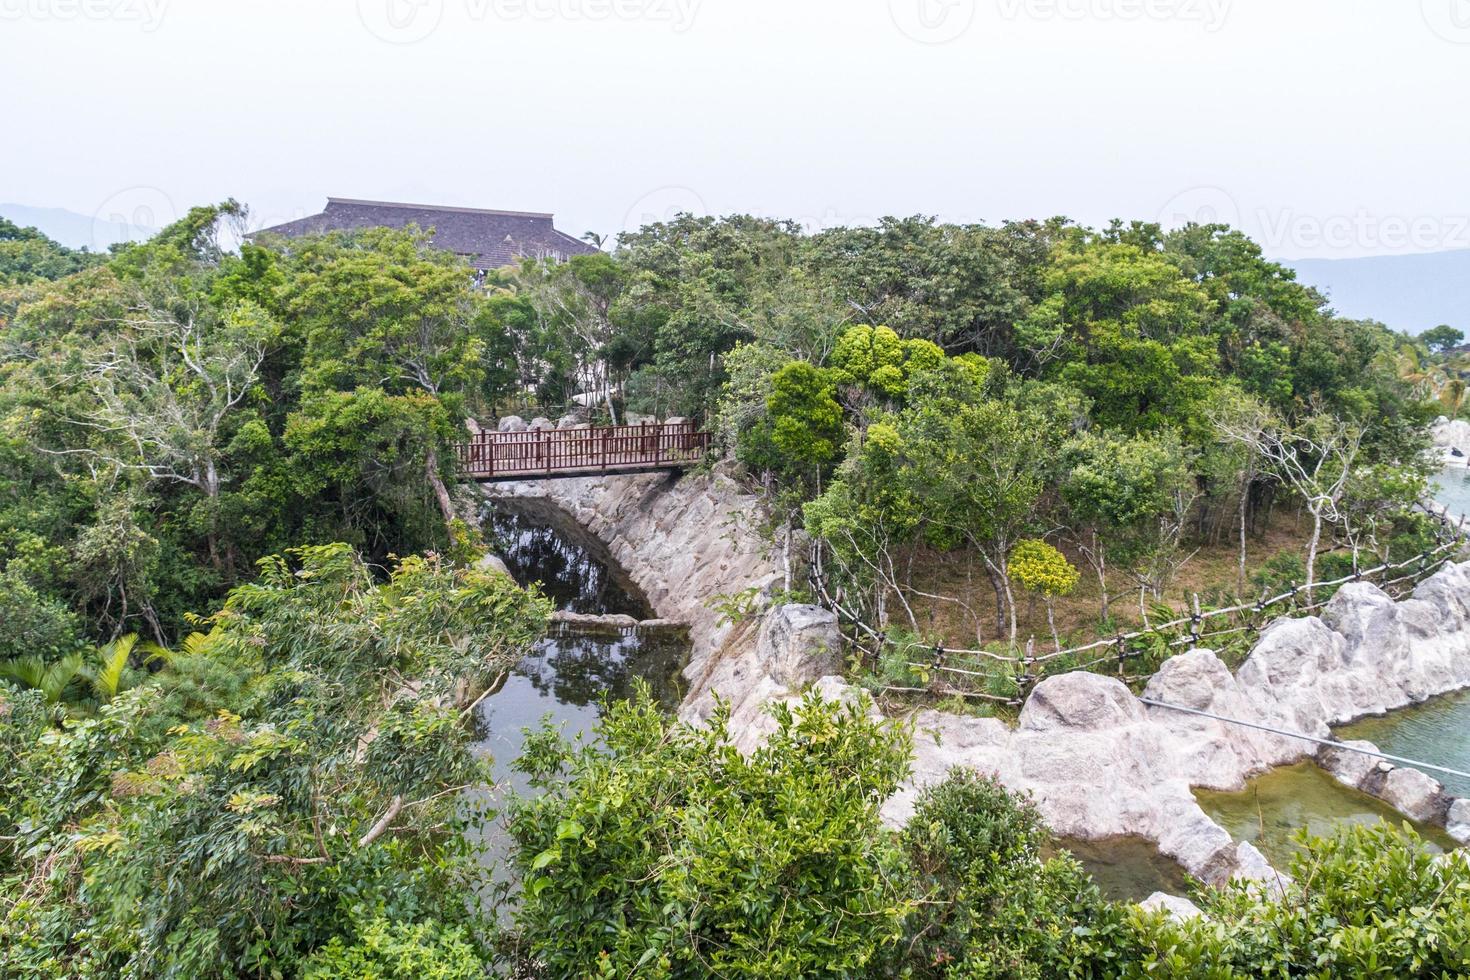 selva china, isla de hainan foto